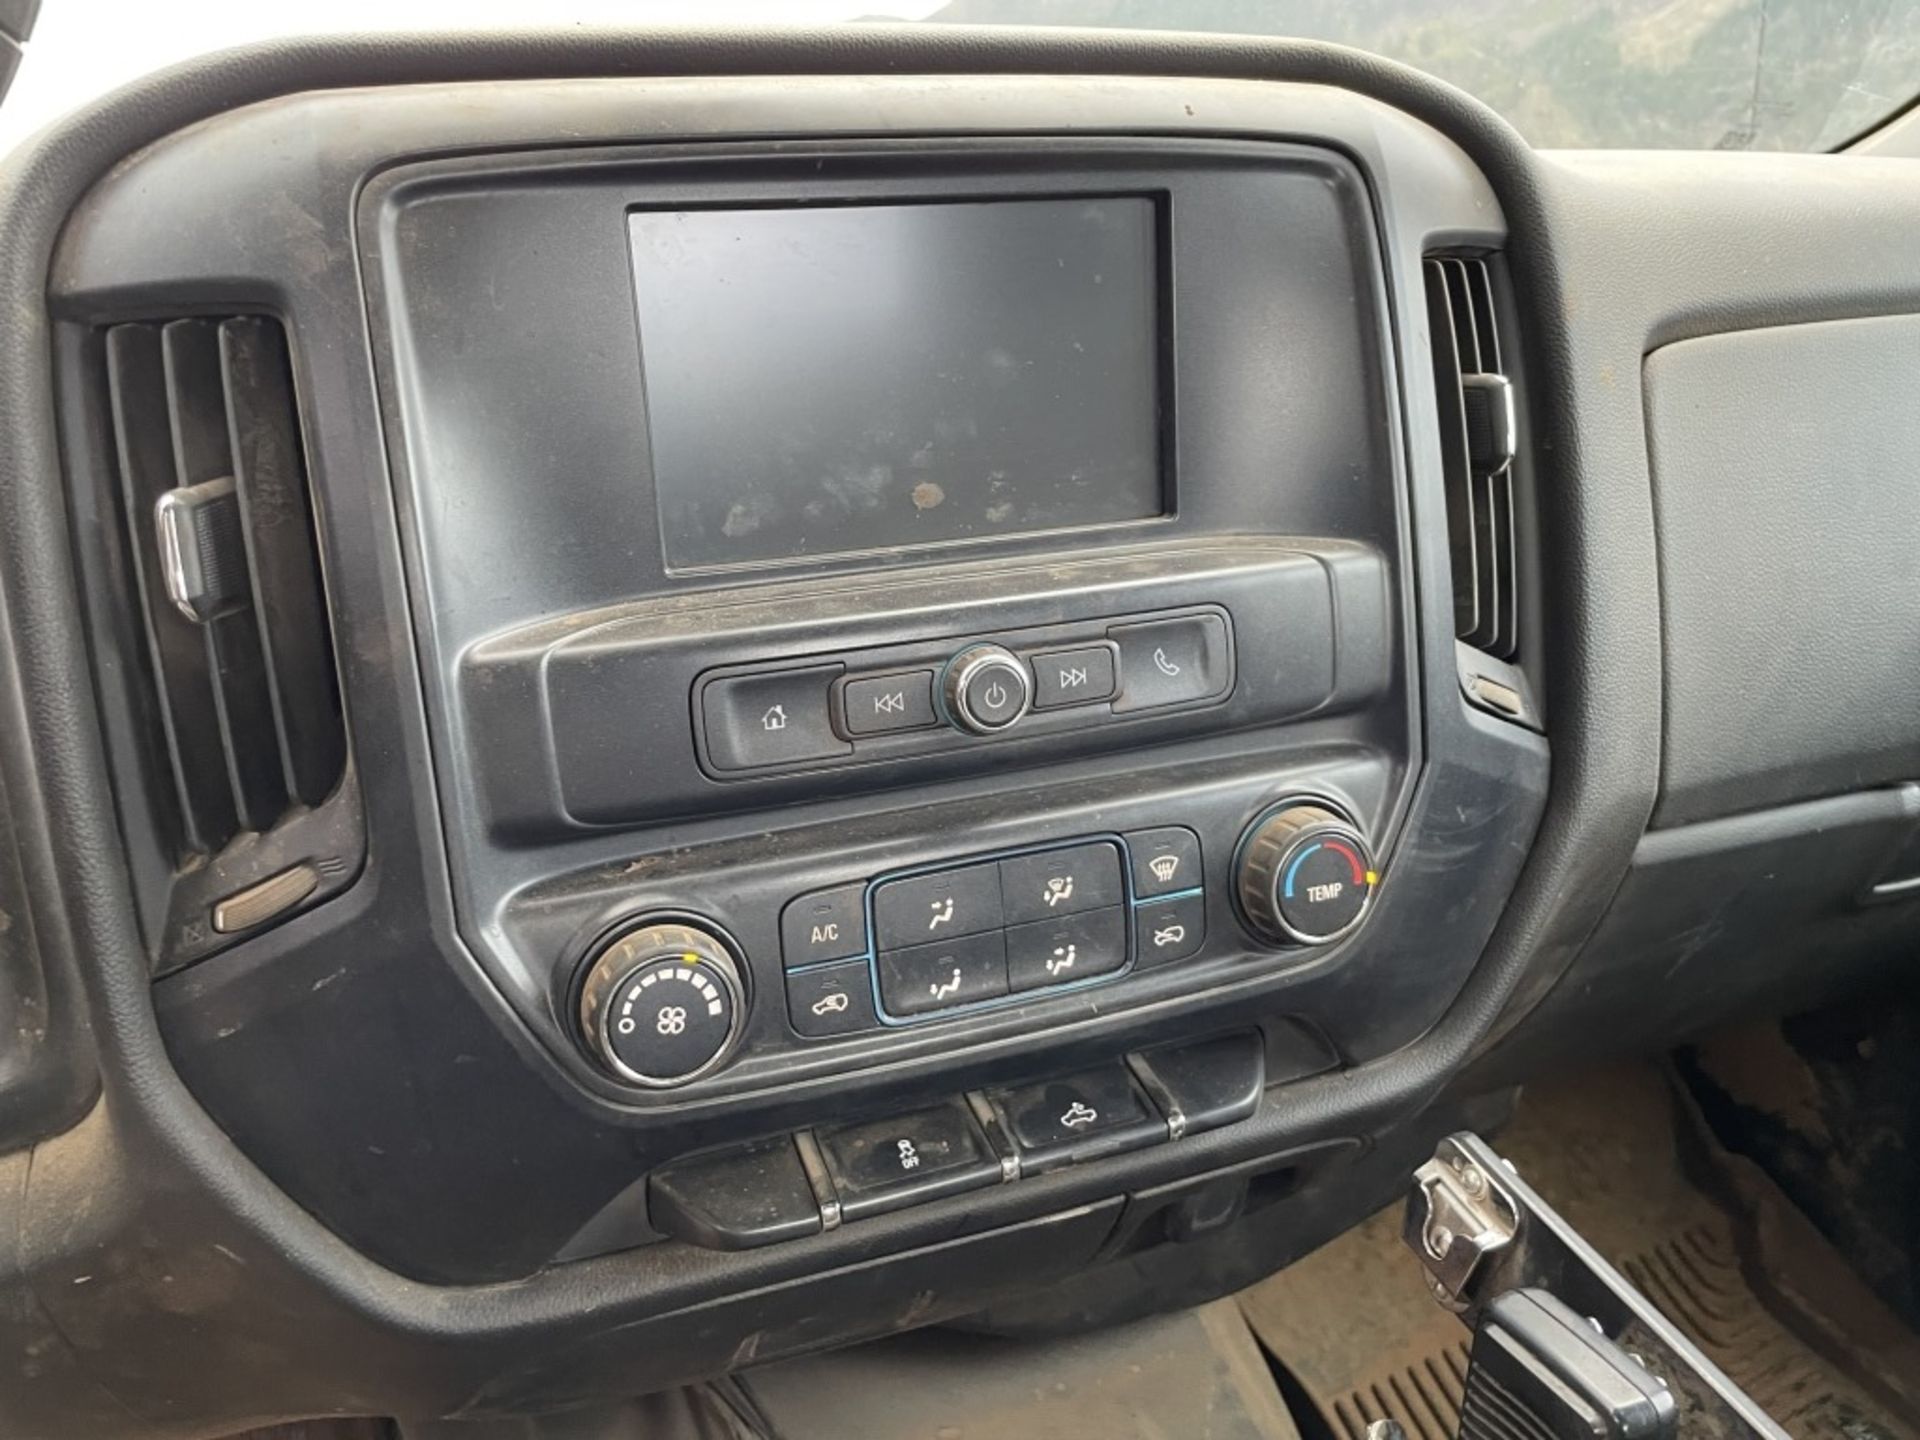 2016 Chevrolet 2500 HD 4x4 Crew Cab Pickup - Image 17 of 22